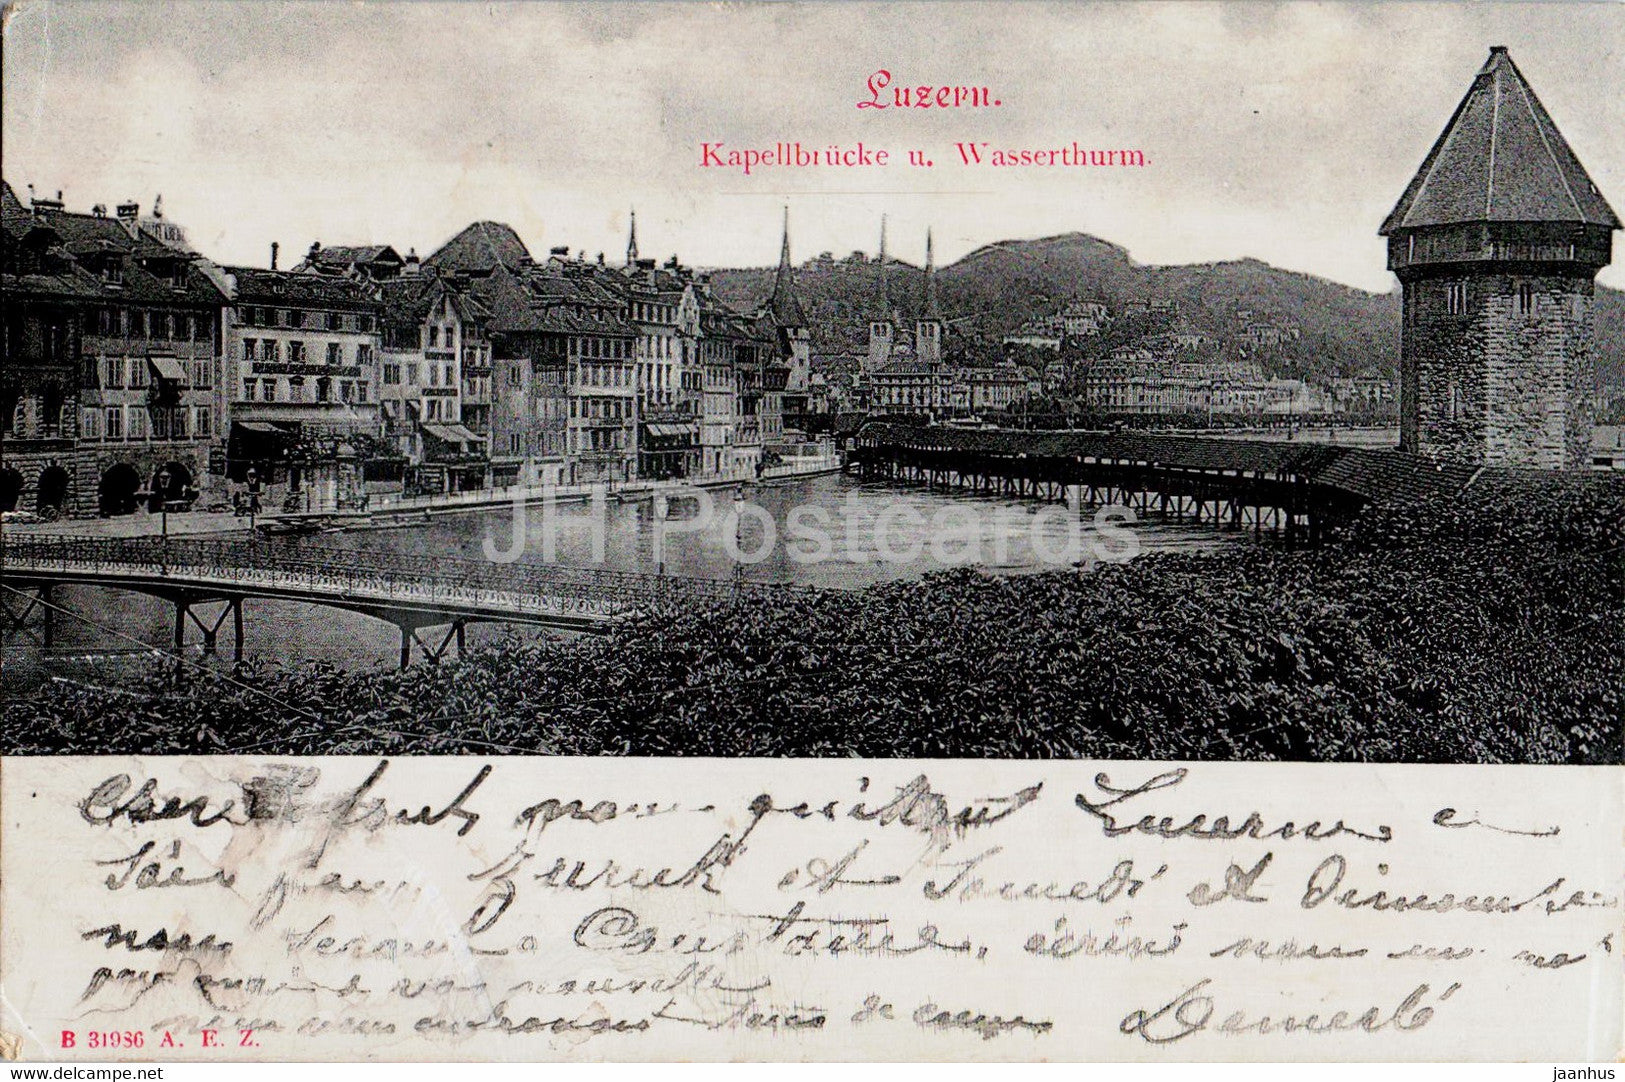 Luzern - Lucerne - Kapellbrucke u Wasserthurm - 31986 - old postcard - 1903 - Switzerland - used - JH Postcards